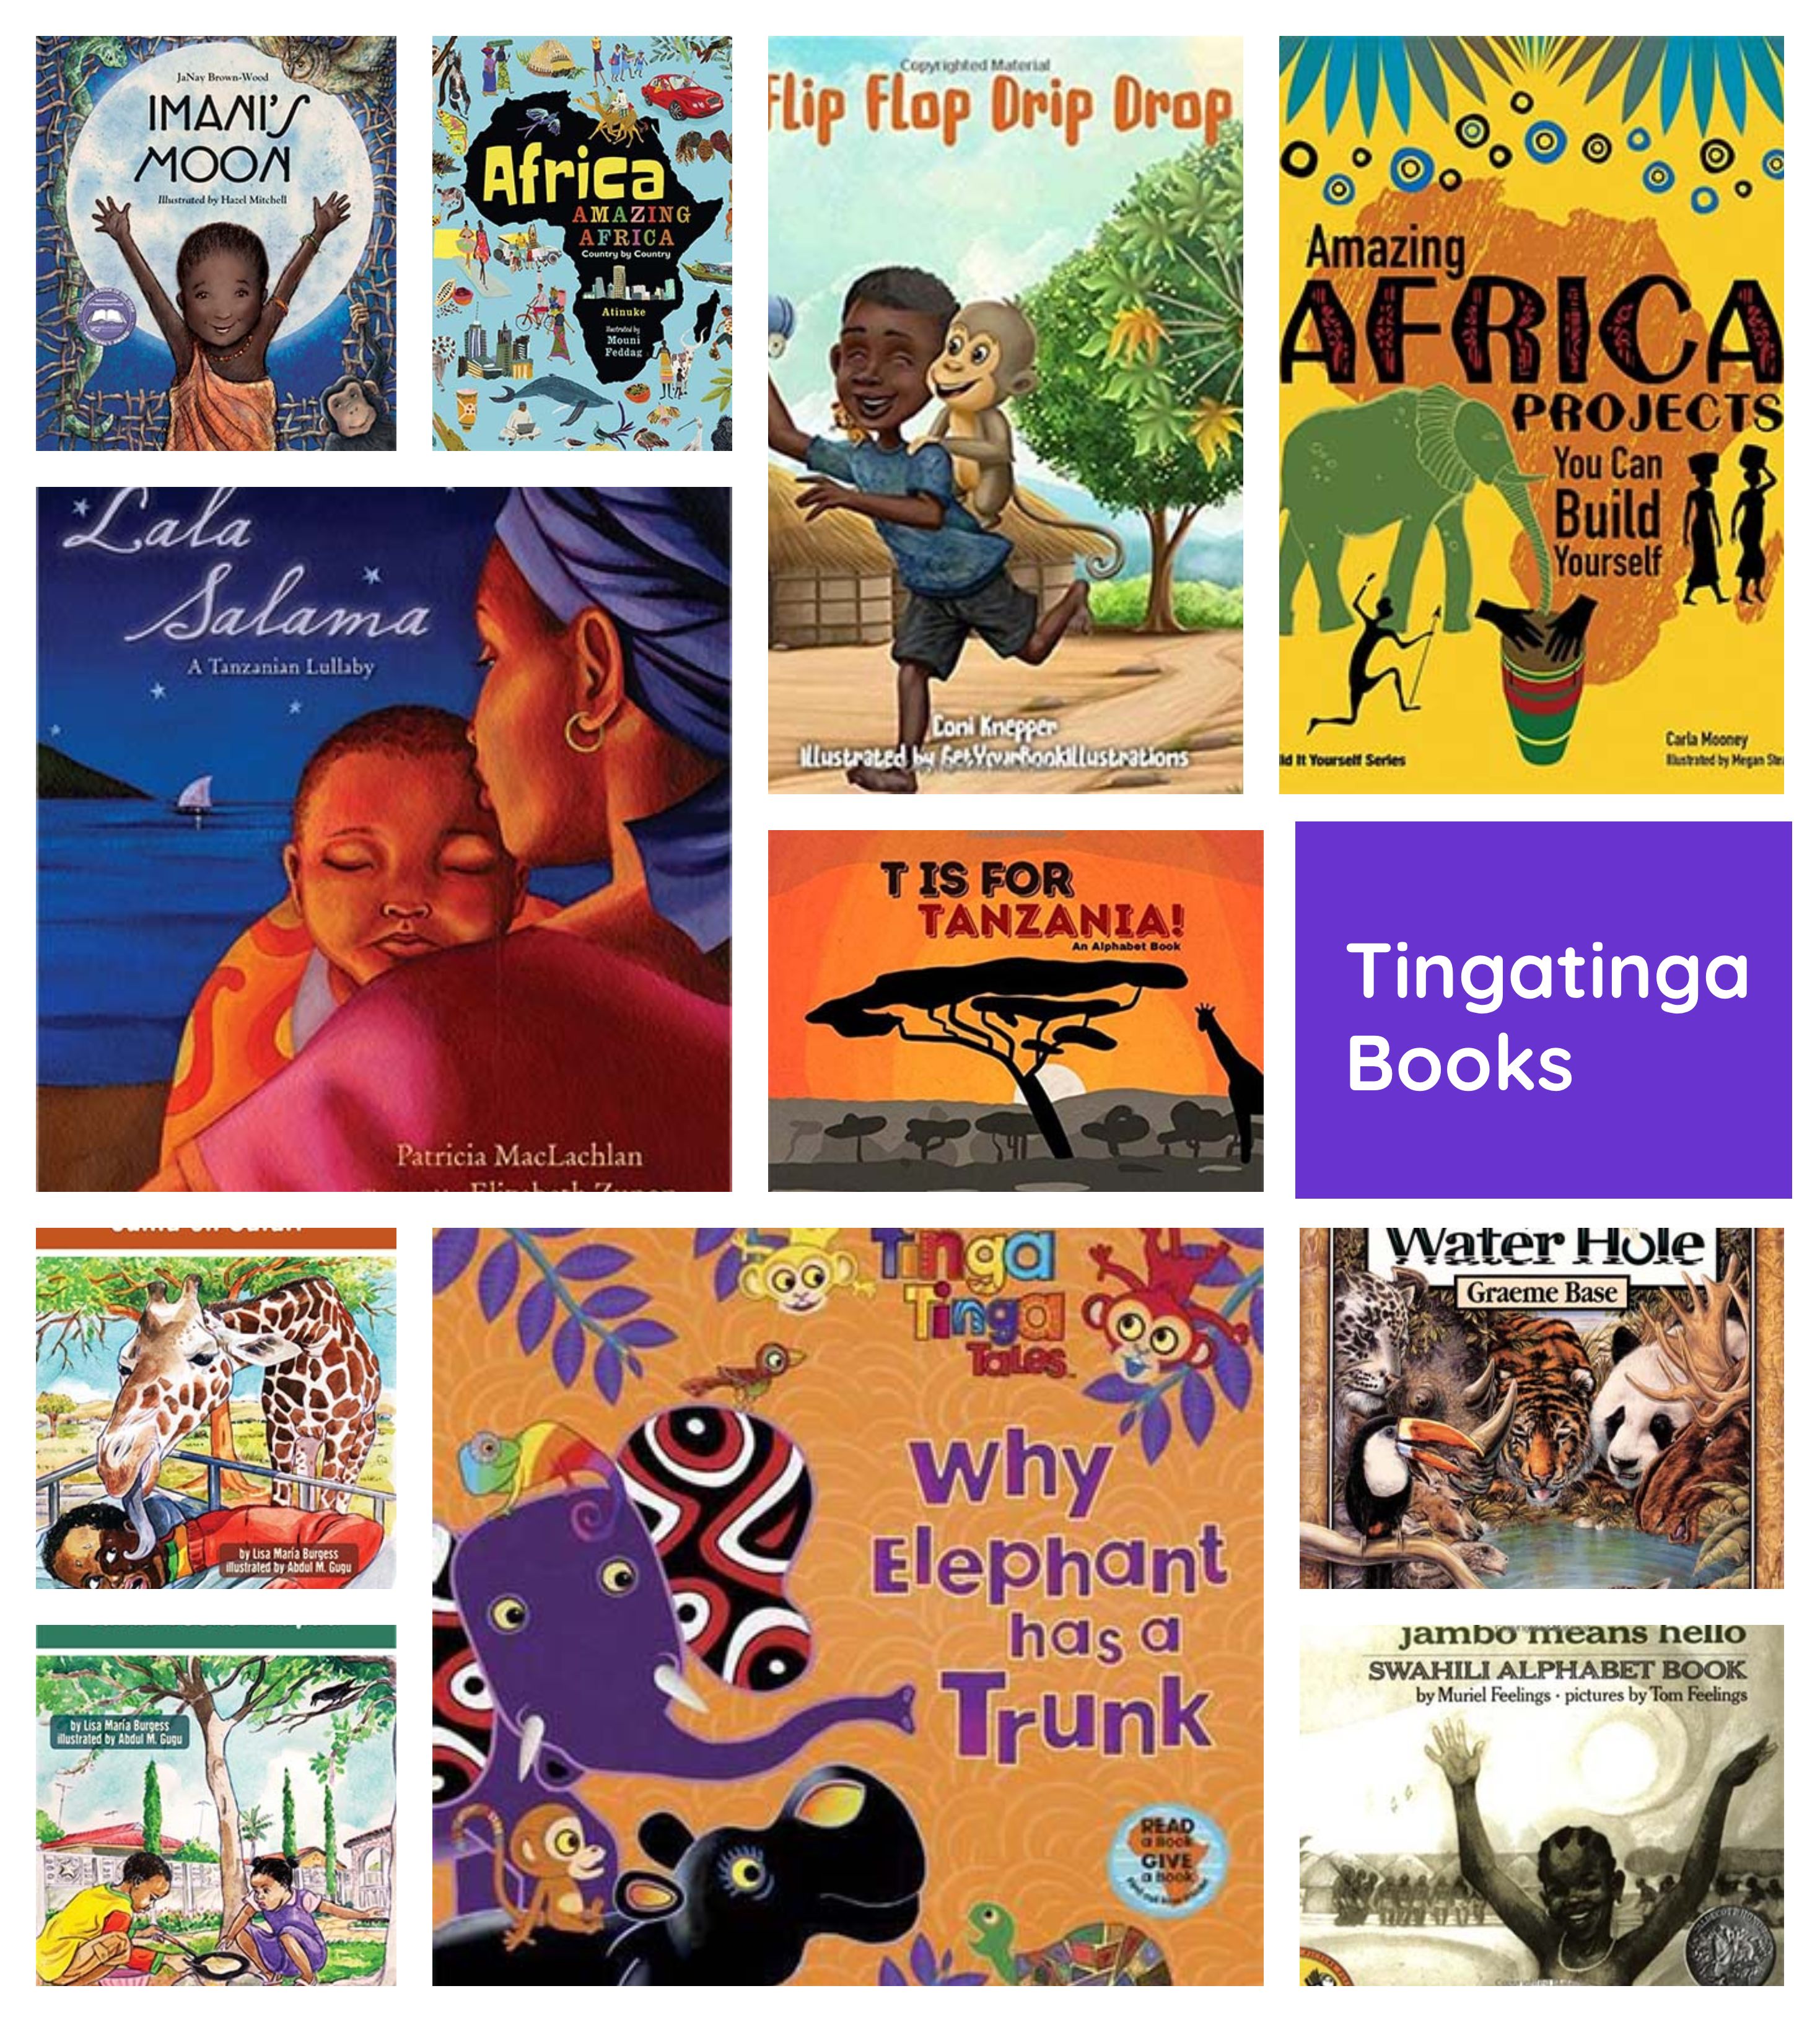 Tingatinga Books